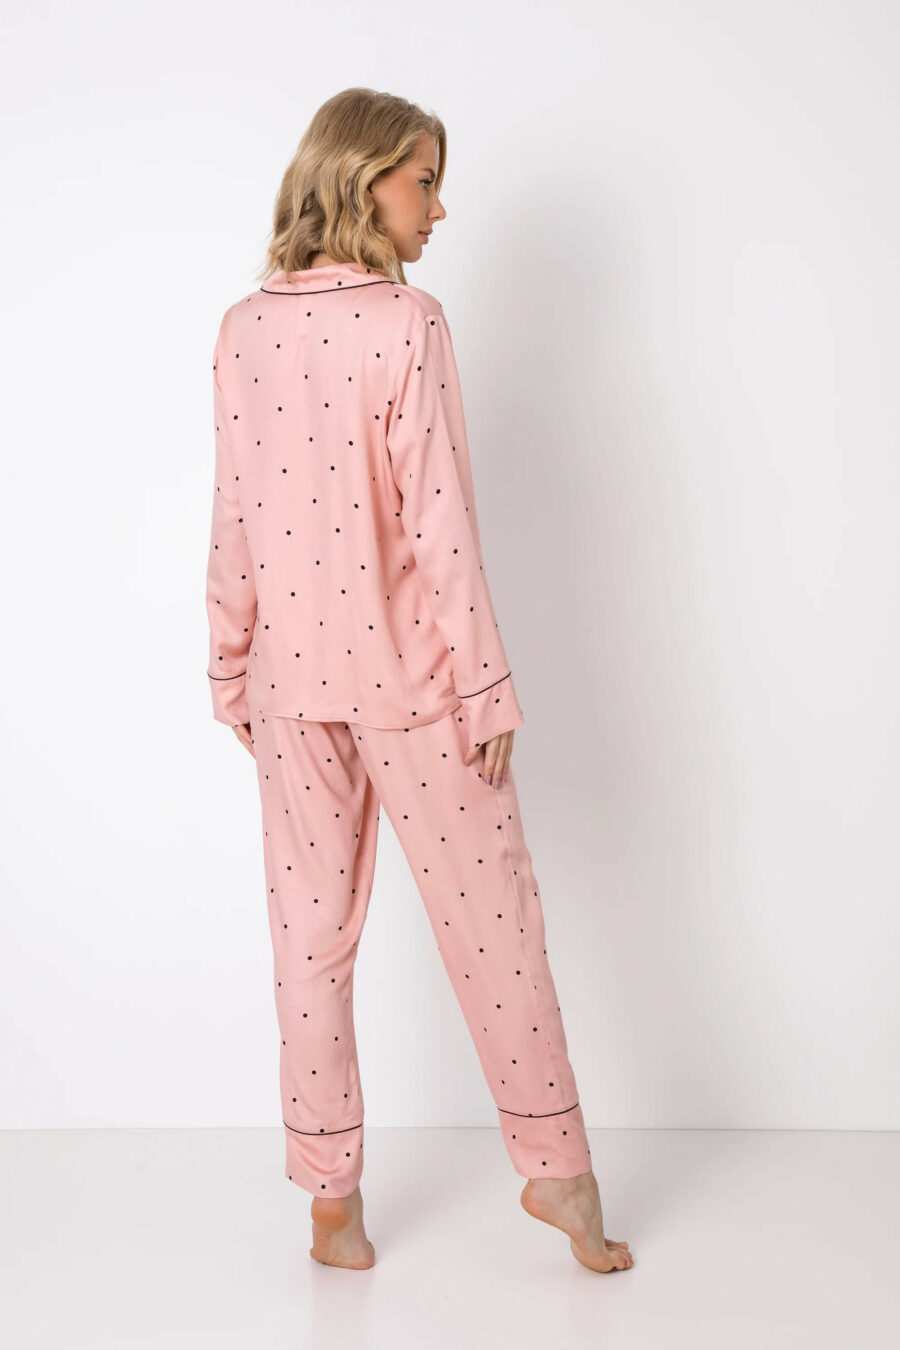 pijama-largo-de-corazones-satinado-marca-aruelle-mod-lauren-back-celesteshops-burgos